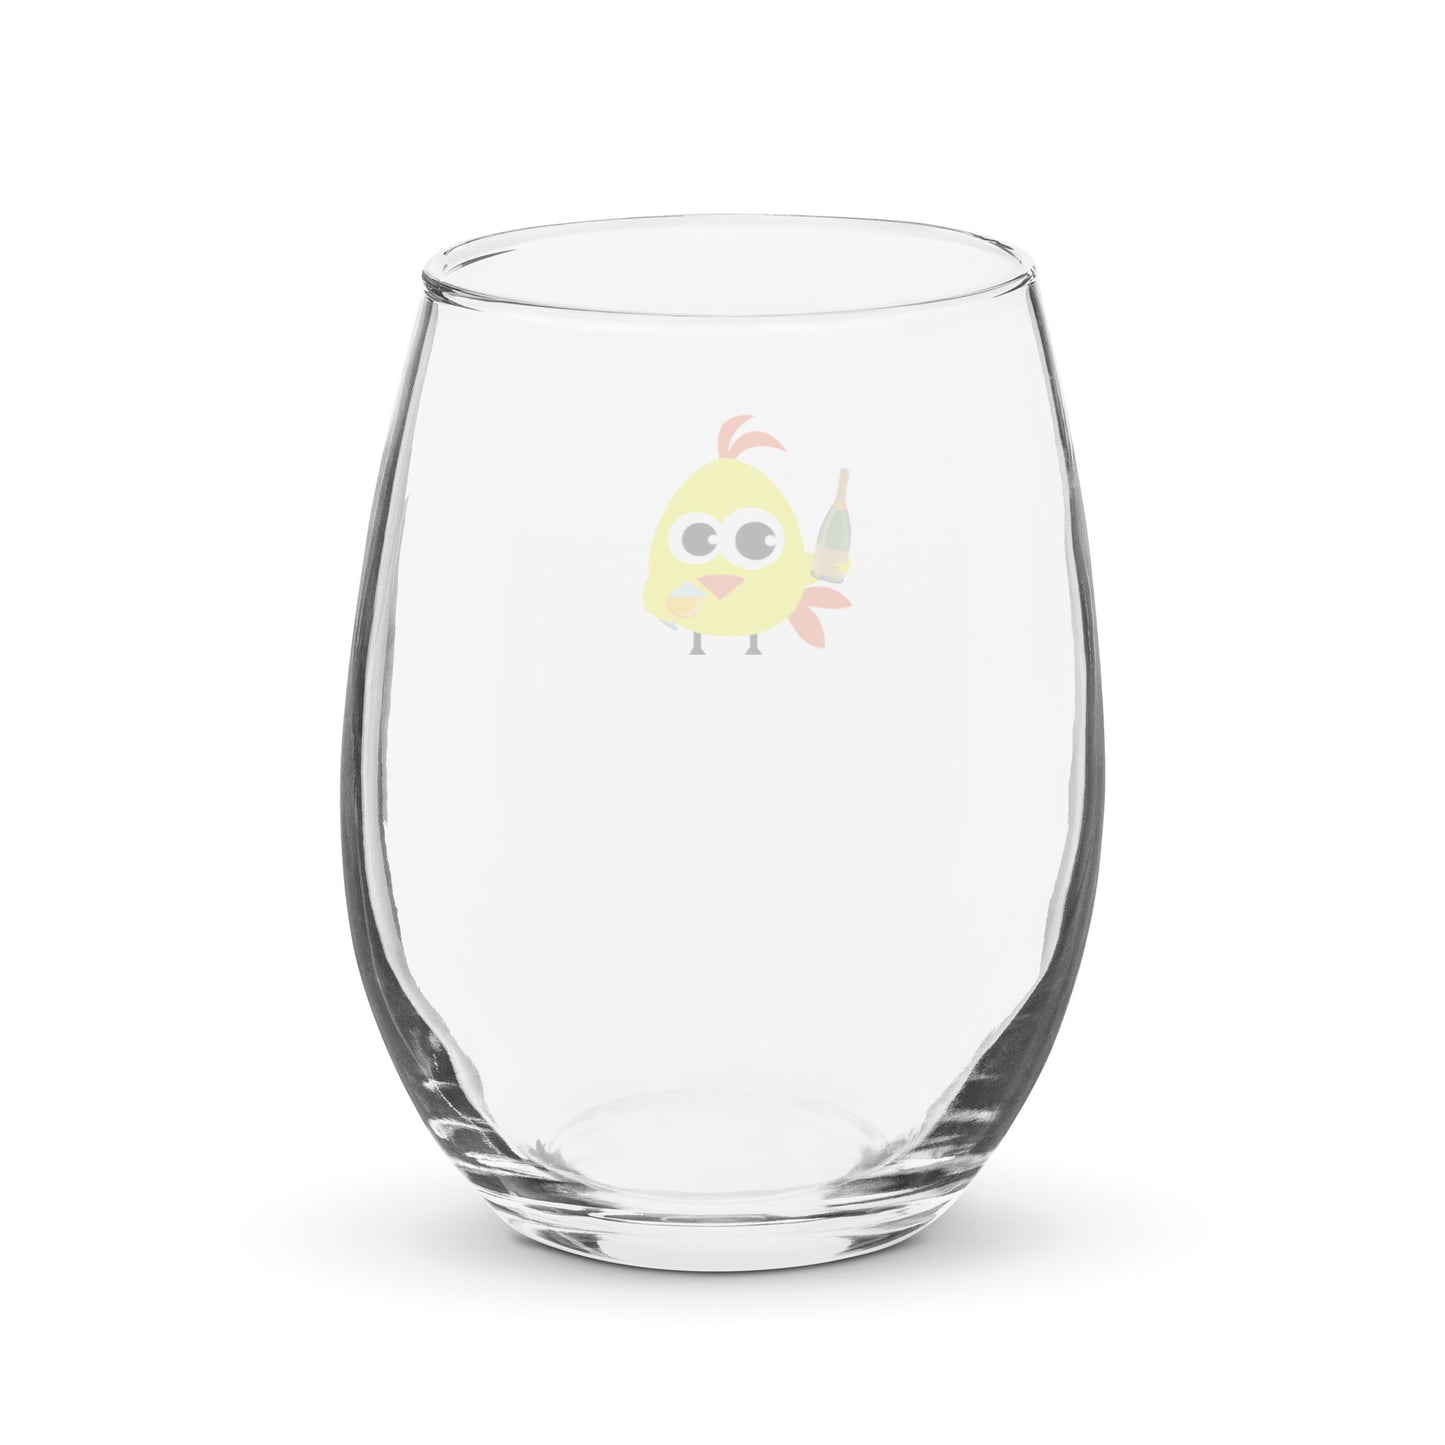 Cheers Mimosa glass